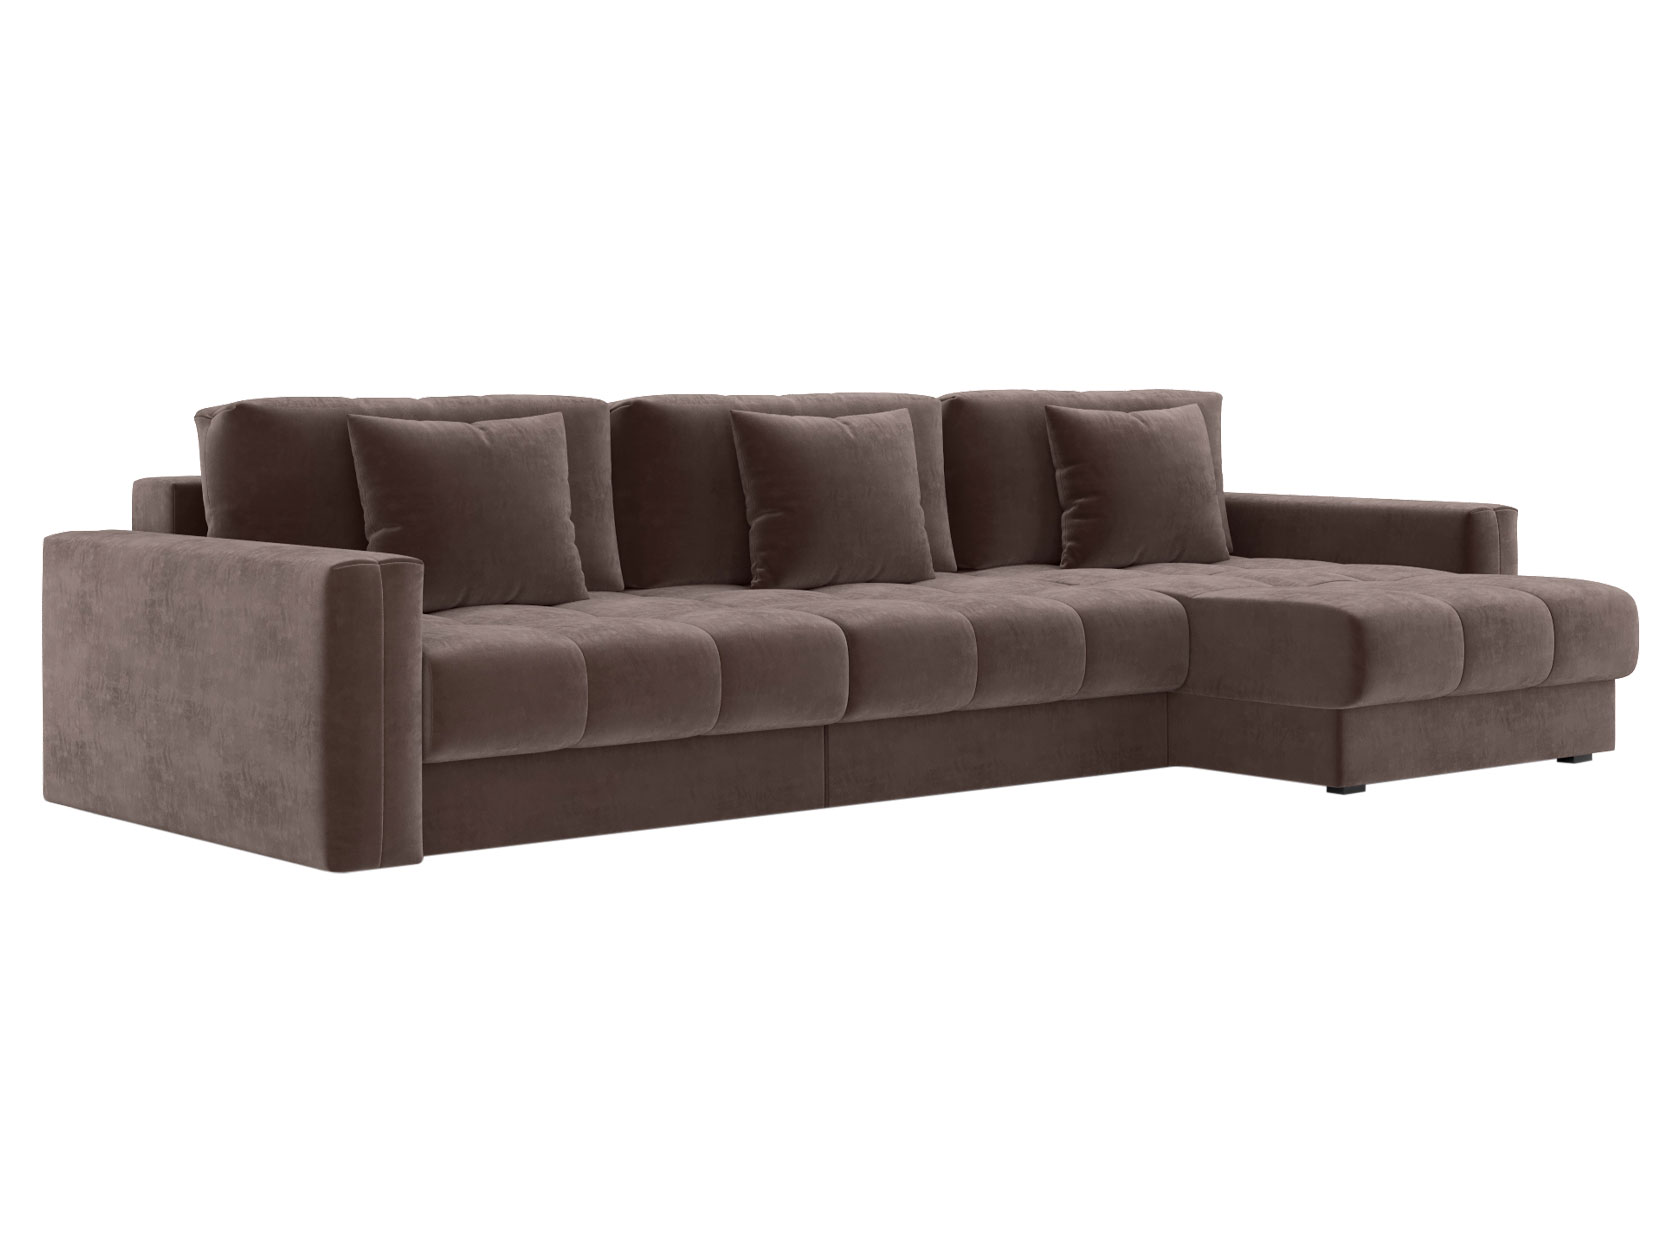 Угловой диван с оттоманкой Диван Клермон с оттоманкой Макси Клермон Макси фото 1